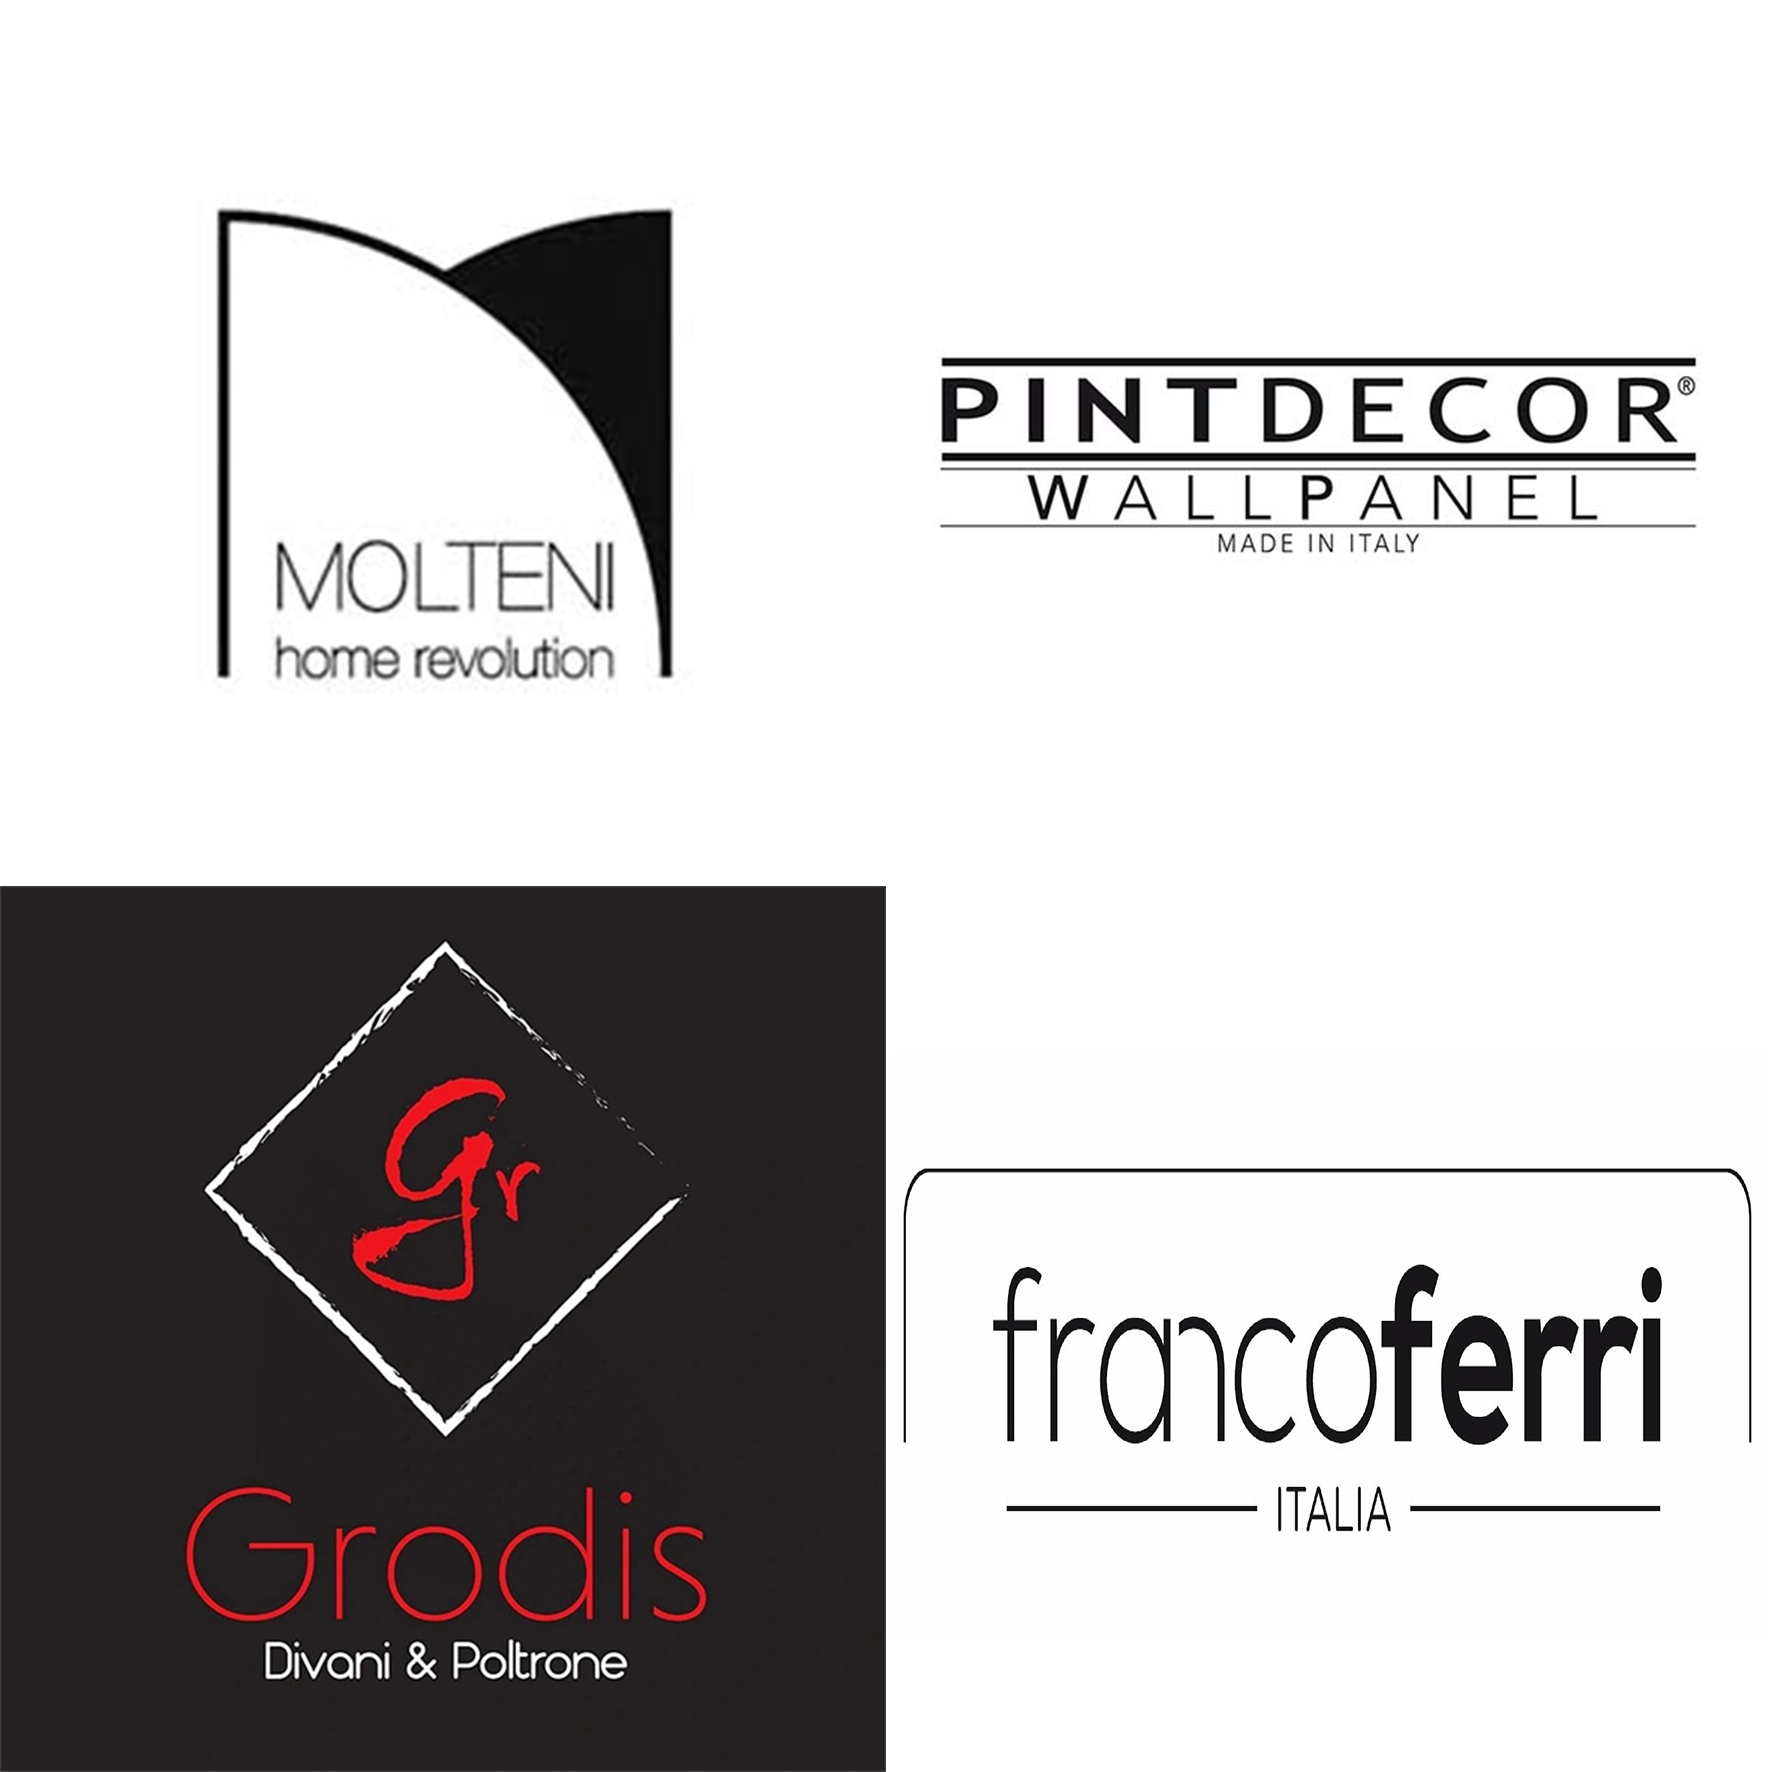 Molteni Home Revolution, Pintdecor, Grodis, Franco Ferri Marinelli Design Group